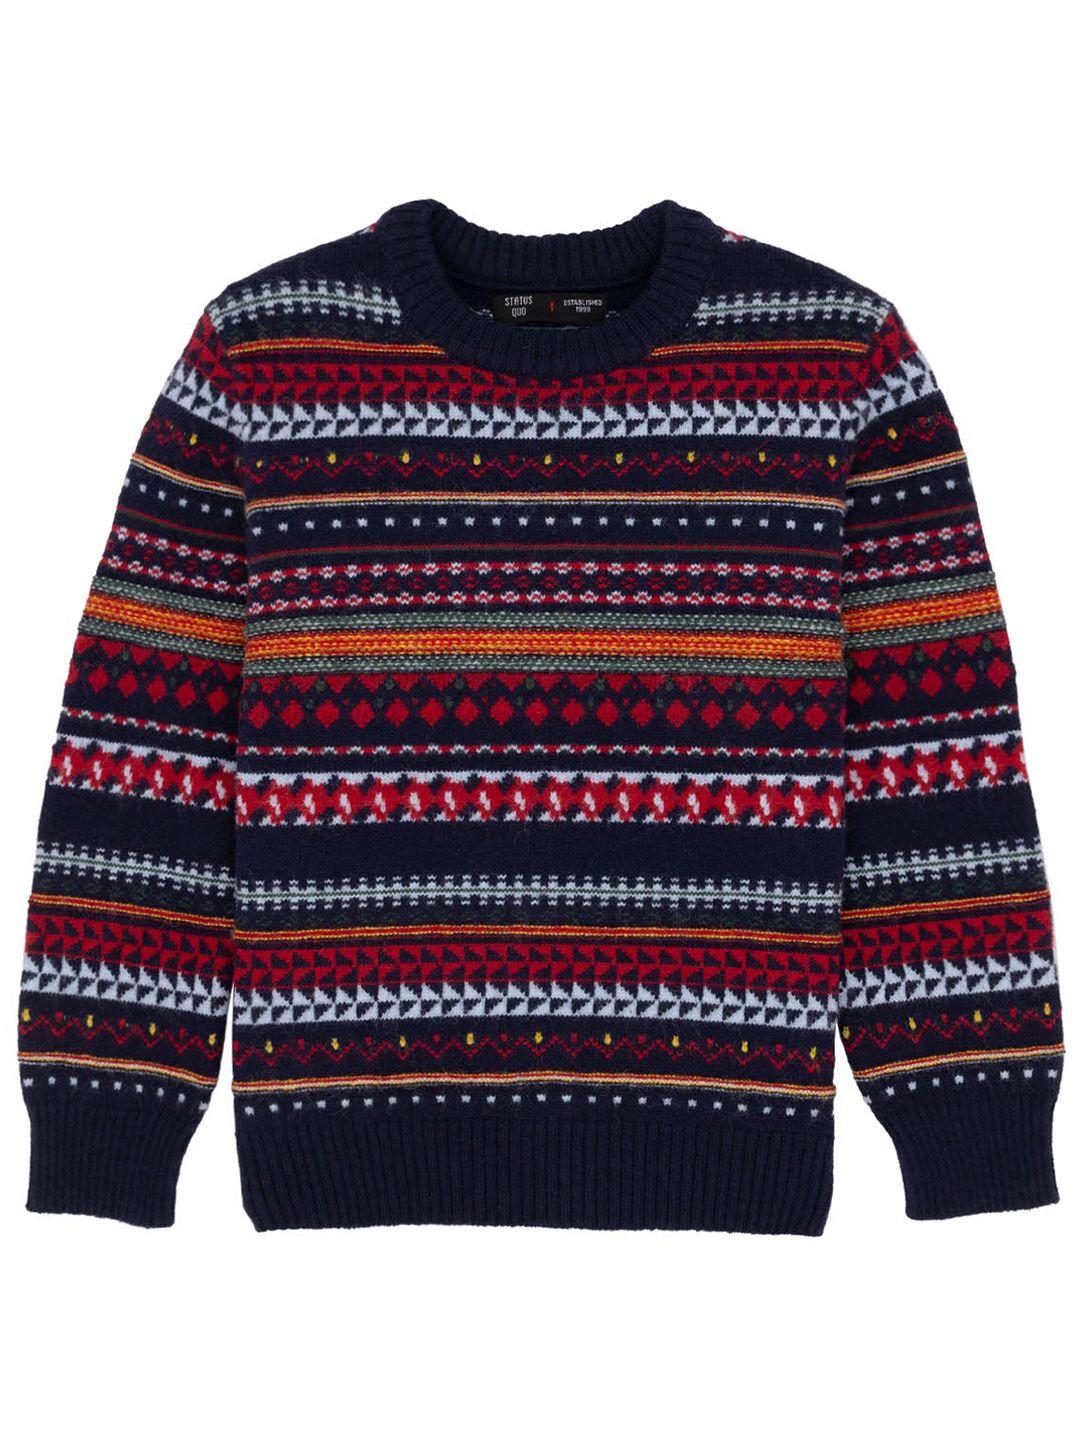 status-quo-boys-argyle-printed-acrylic-pullover-sweater